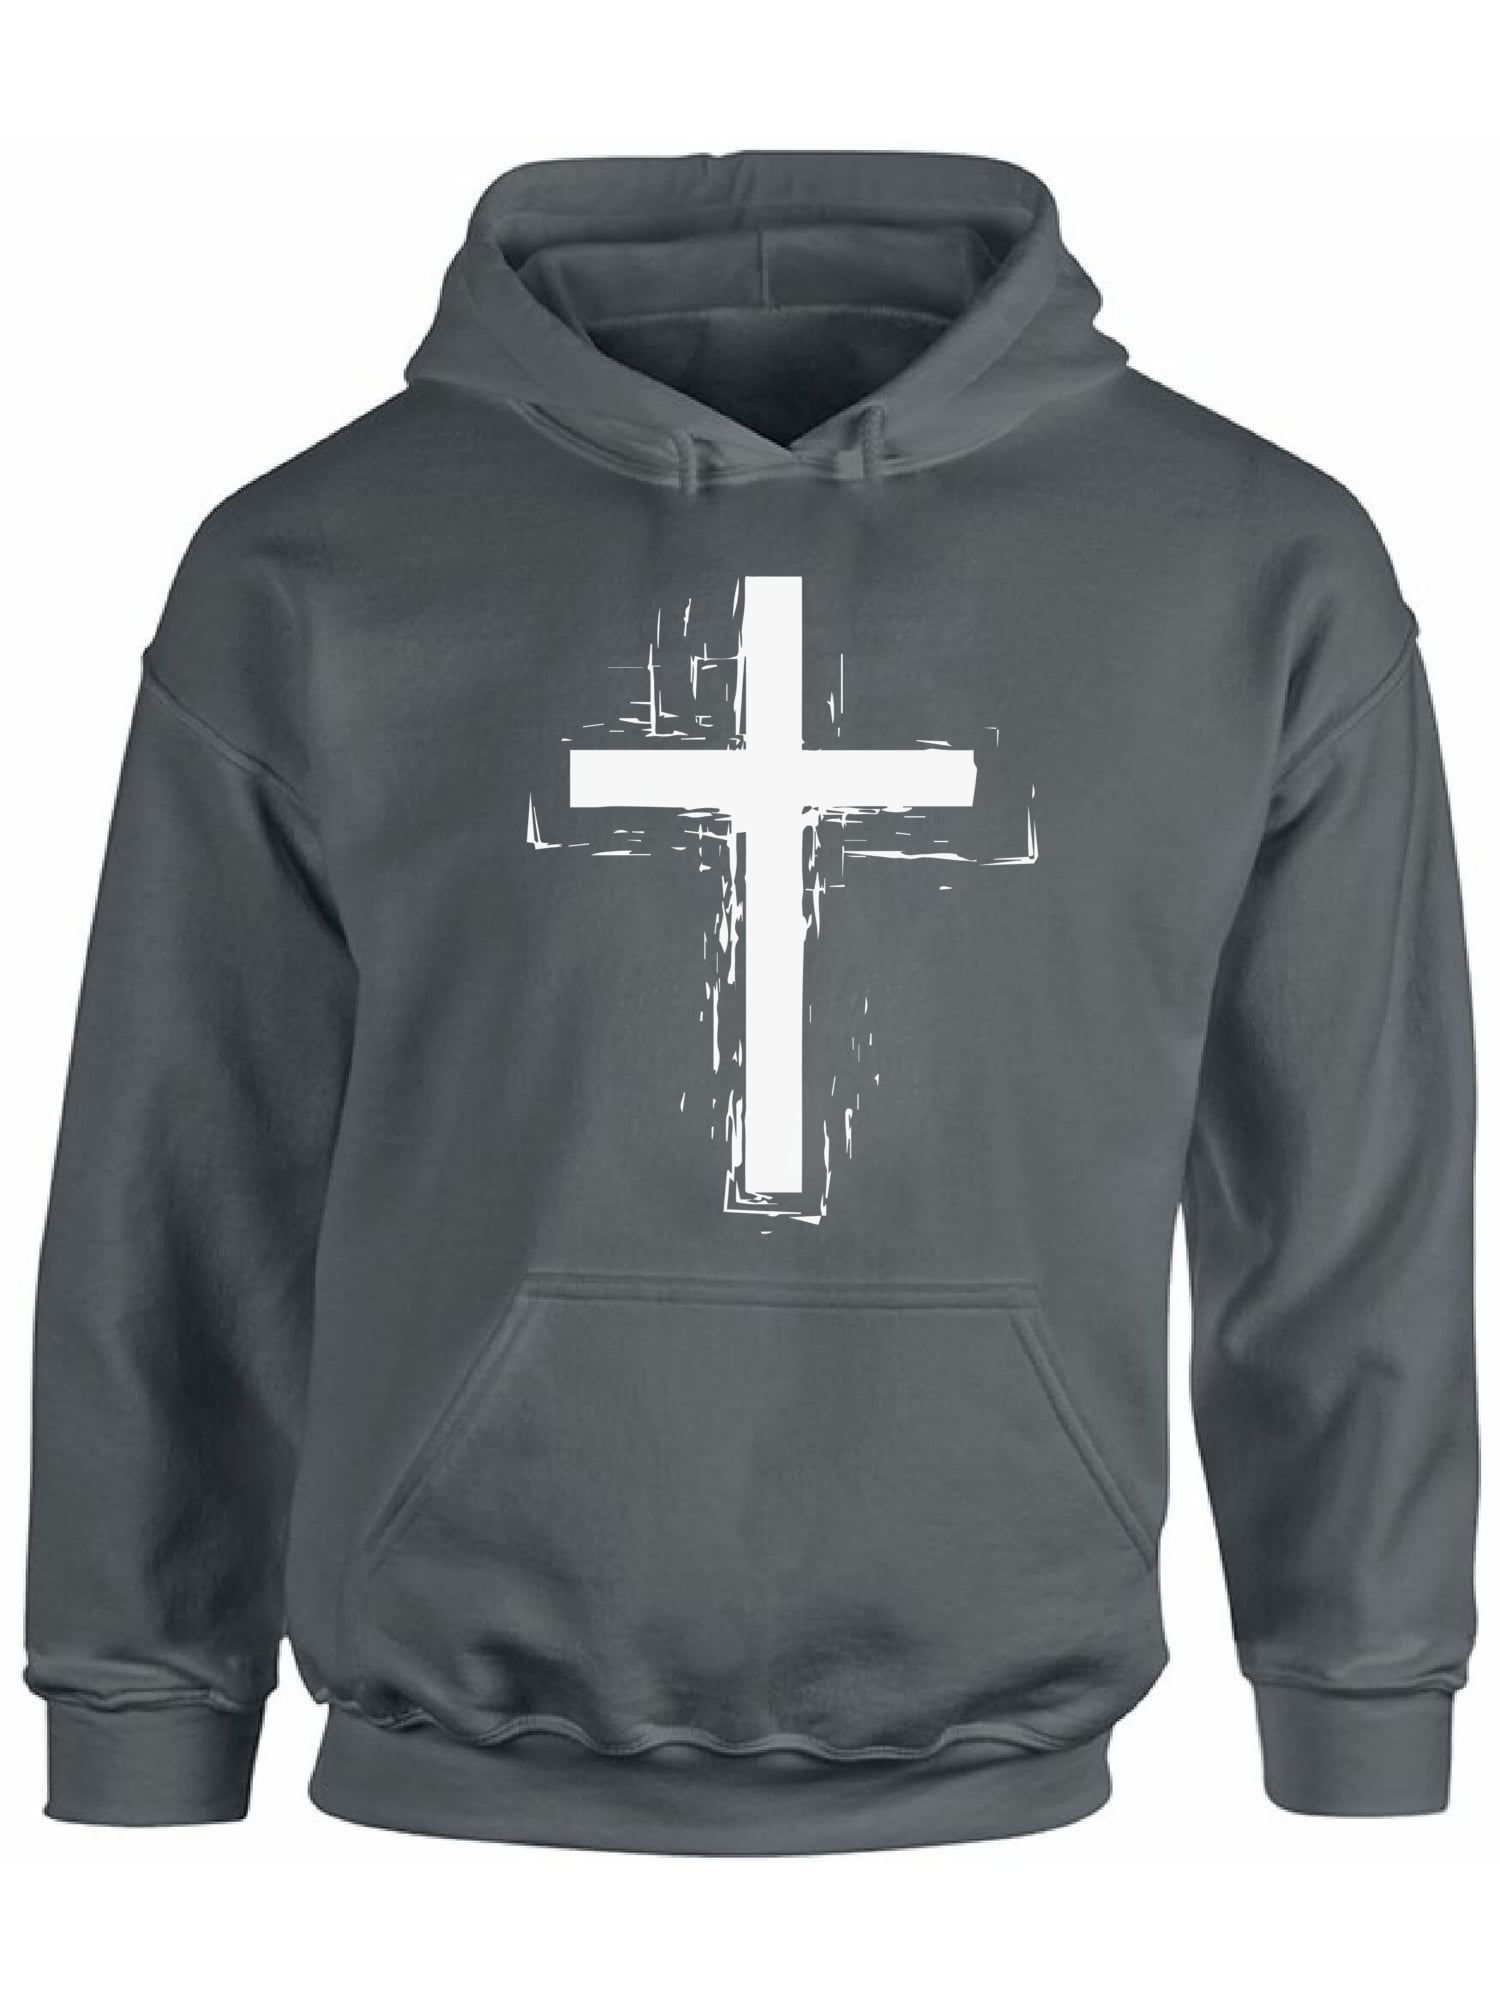 christian hoodies